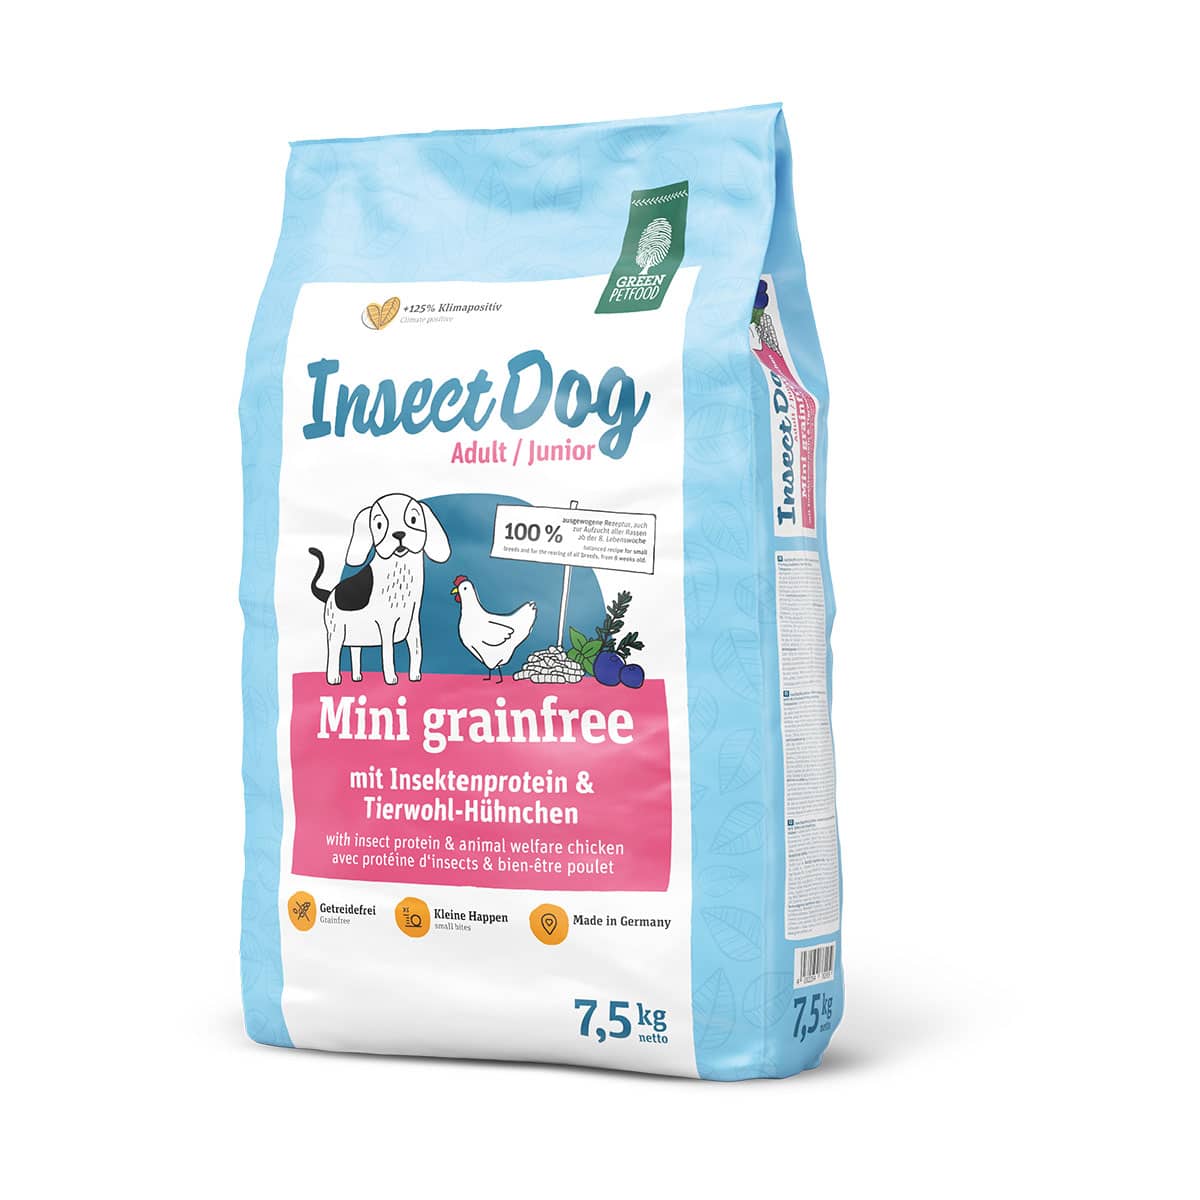 InsectDog Mini Grainfree 2x7